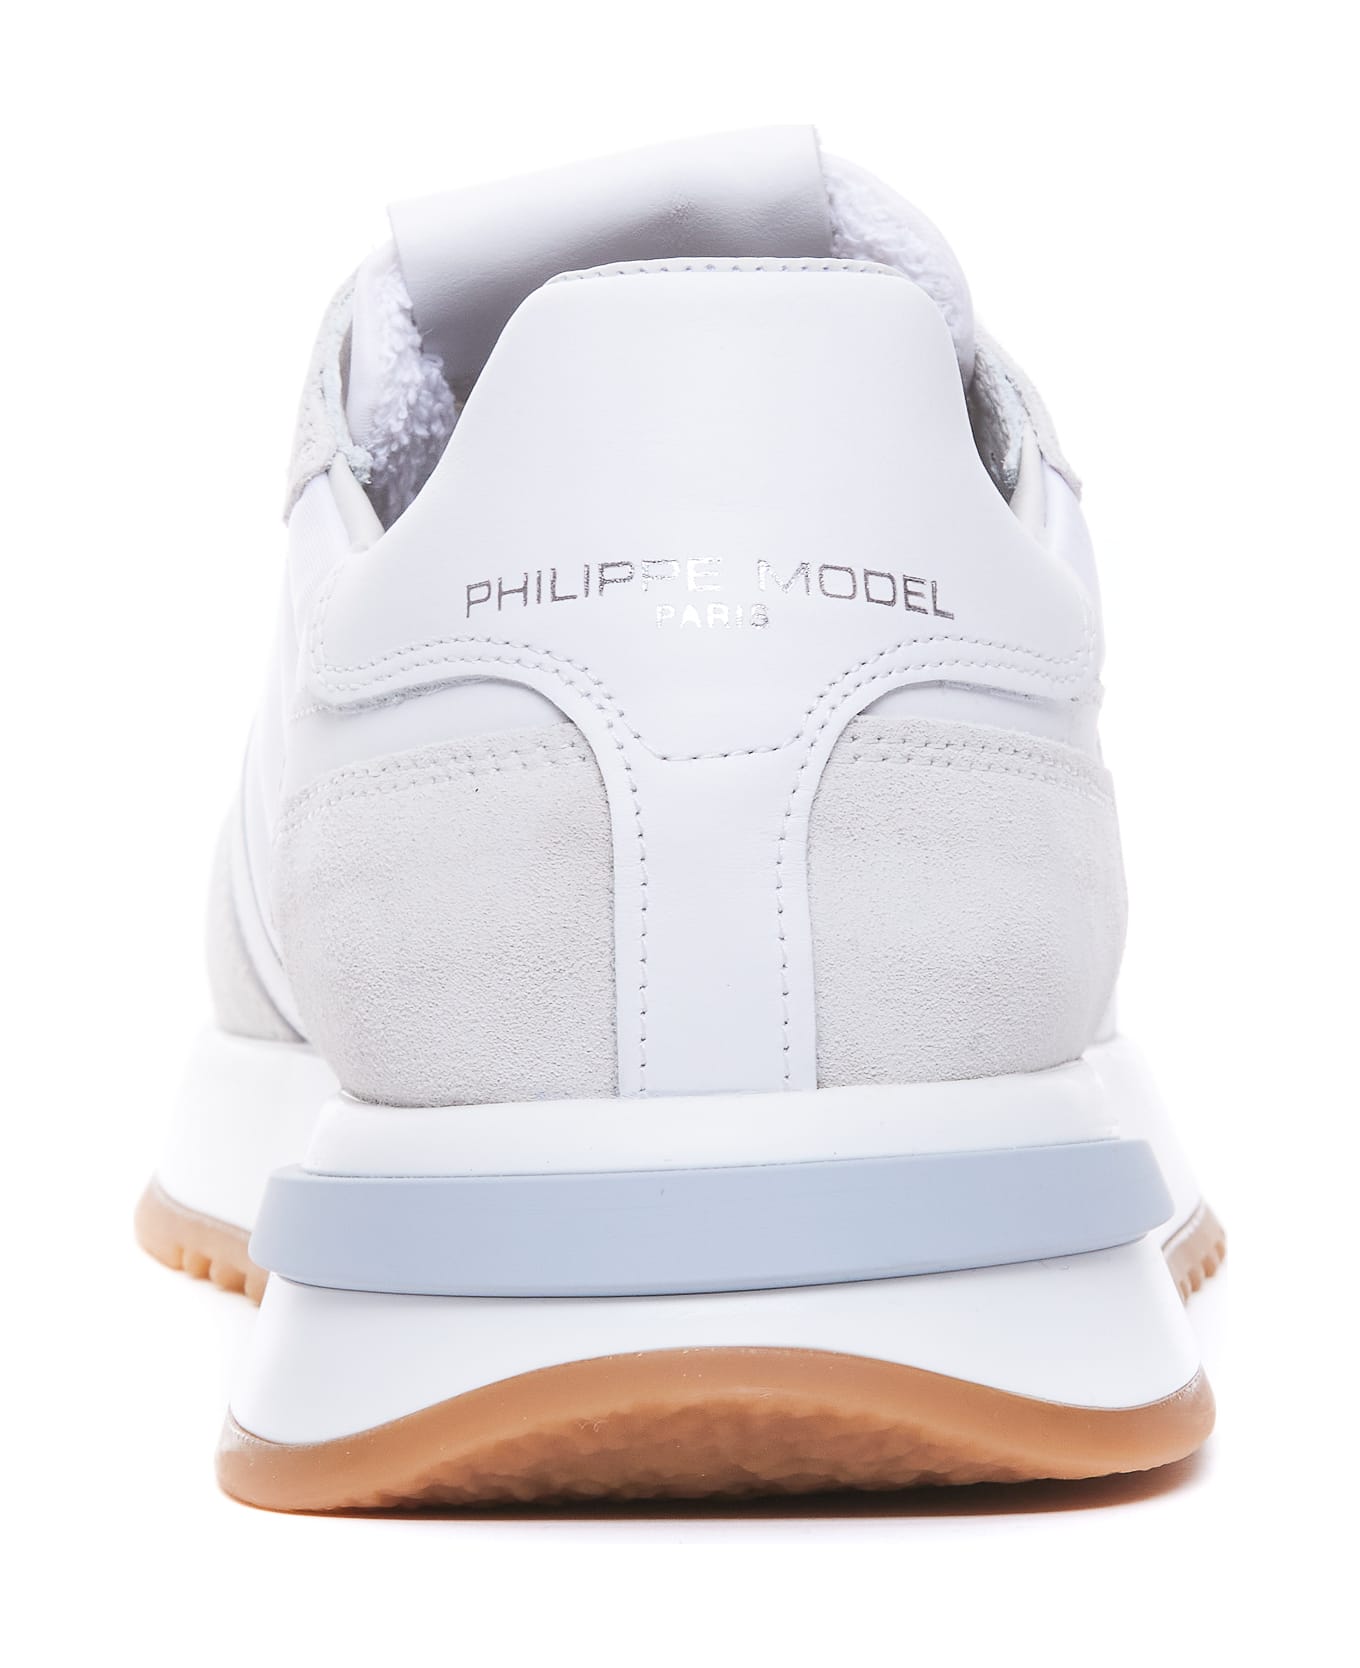 Philippe Model Tropez 2.1 Sneakers - White